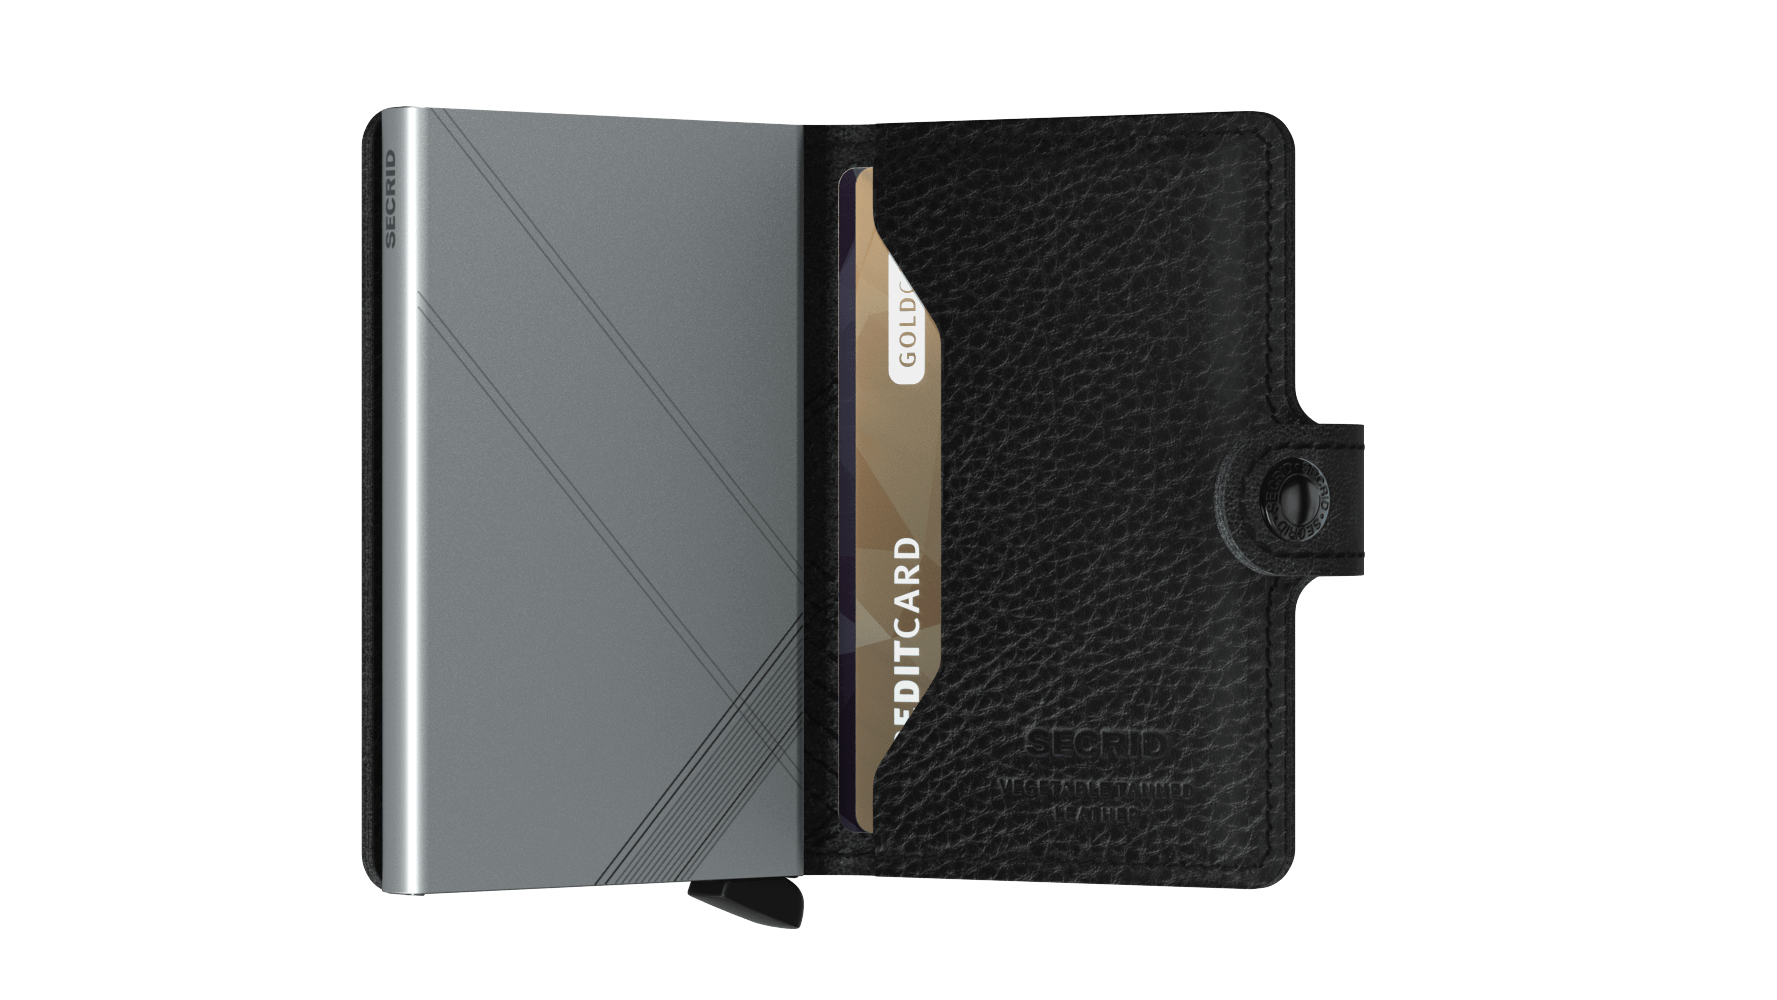 Miniwallet | Stitched Linea Black Leather | by Secrid Wallets - Lifestory - Secrid Wallets